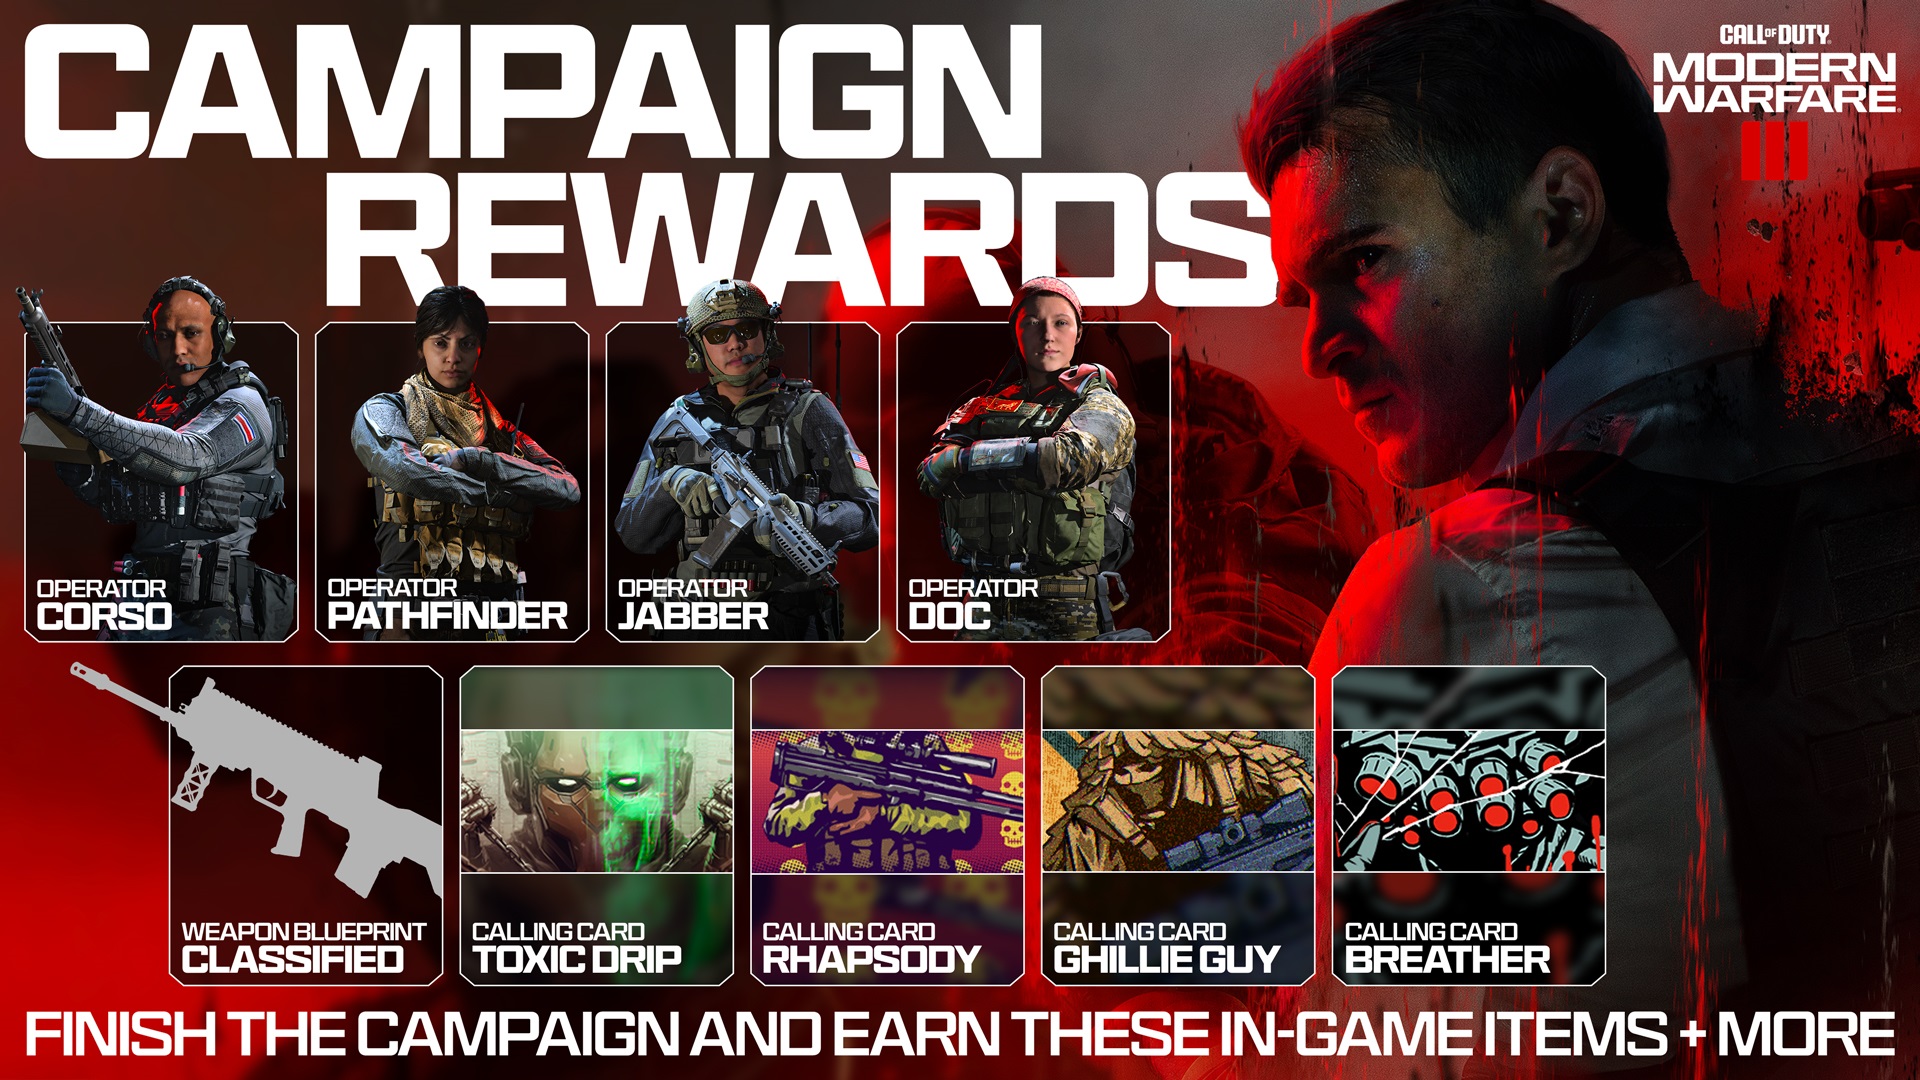 All Modern Warfare 3 campaign rewards